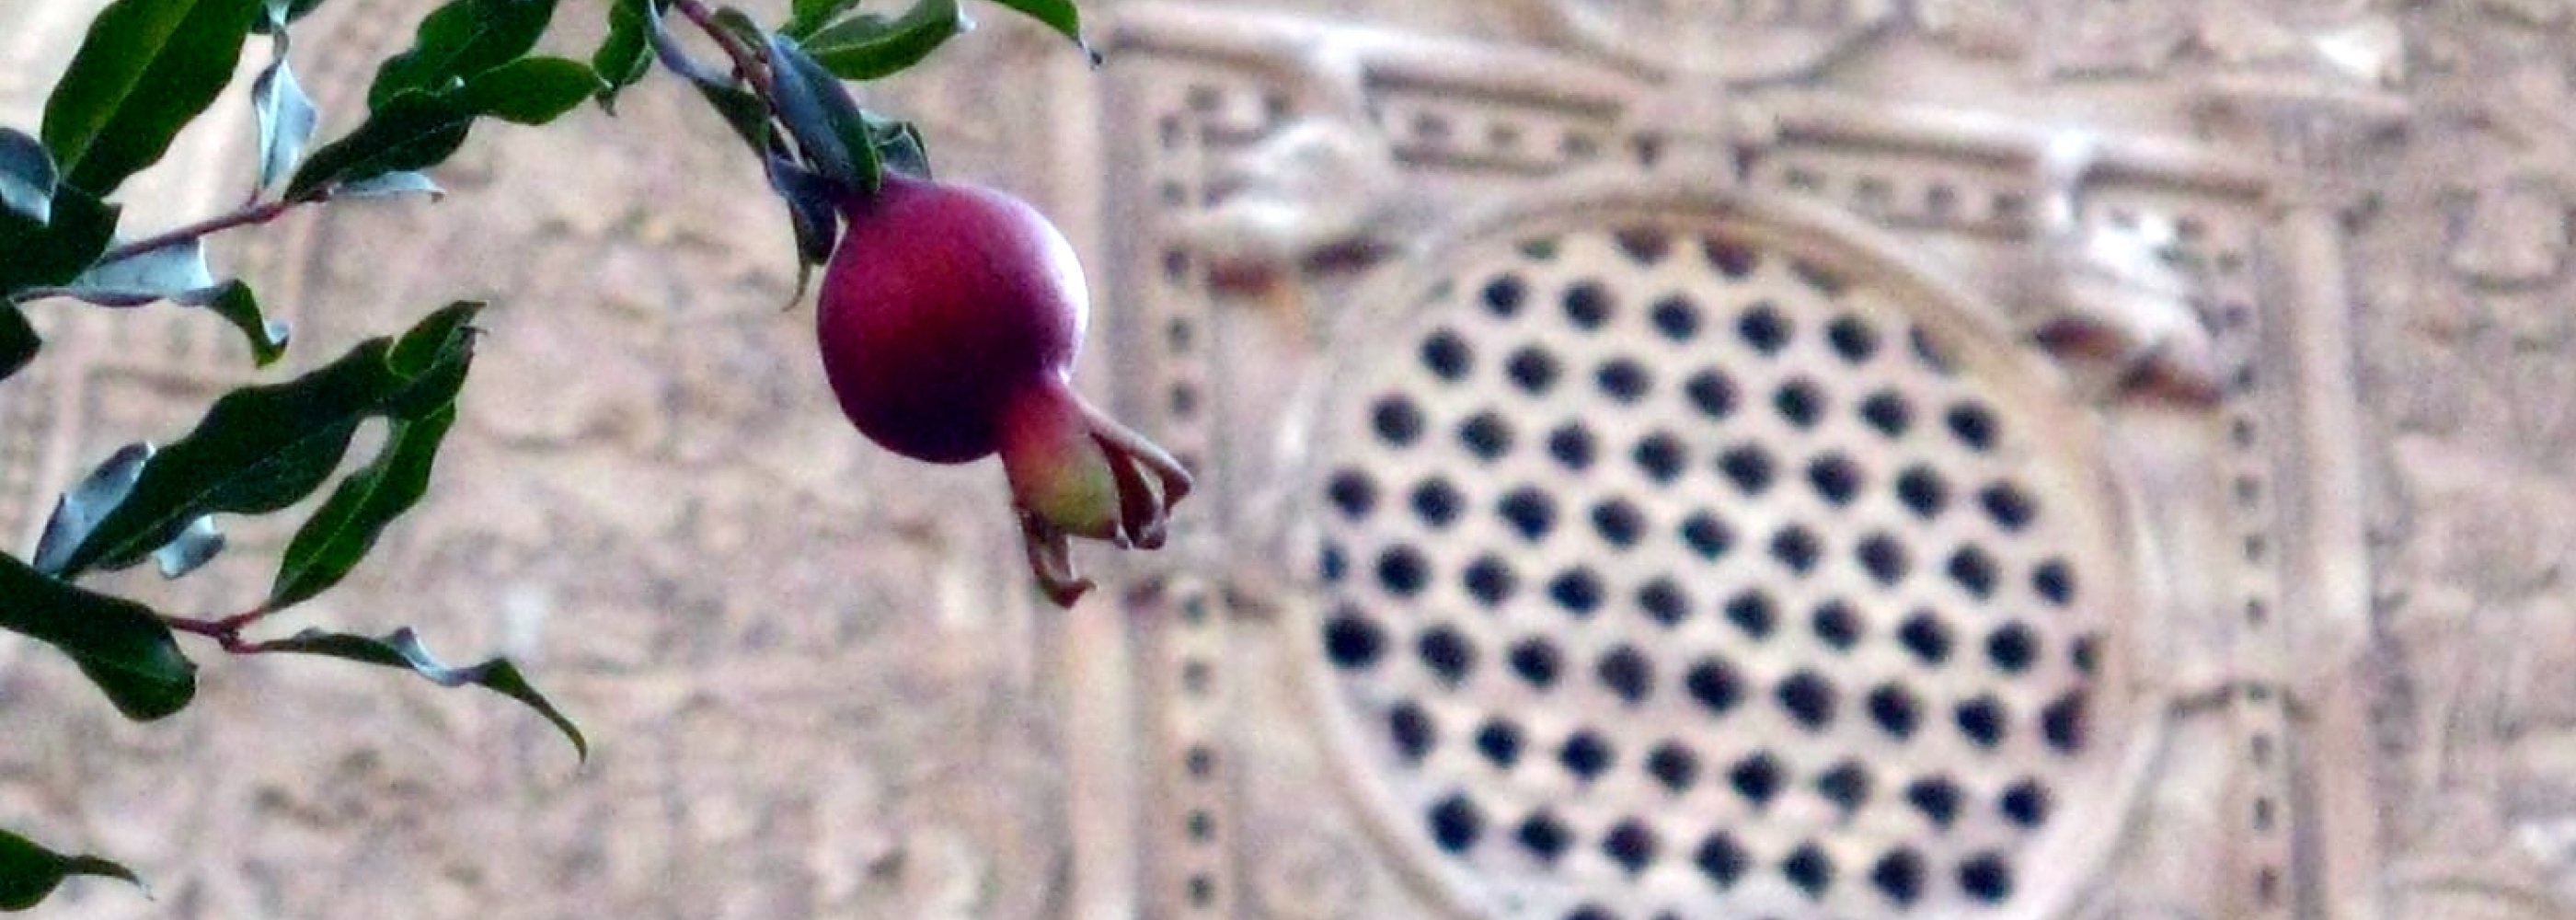 درخت انار - کاشان ایران